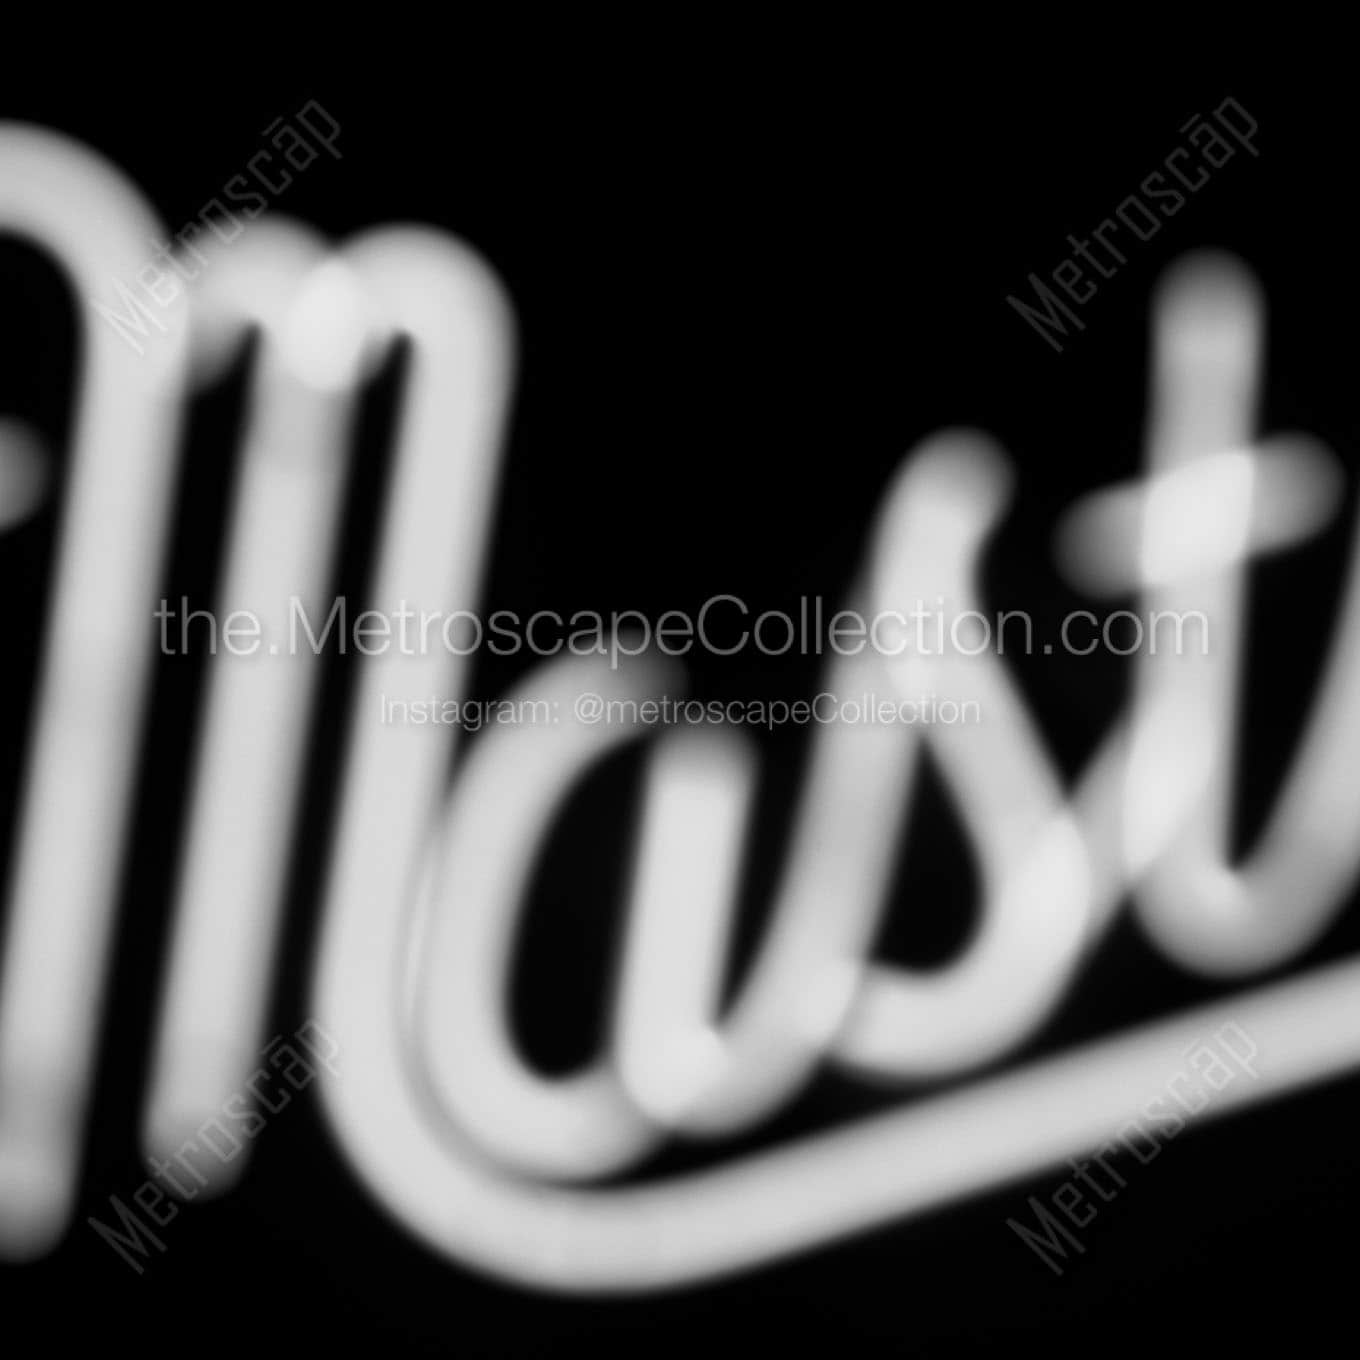 mastrys neon sign Black & White Office Art